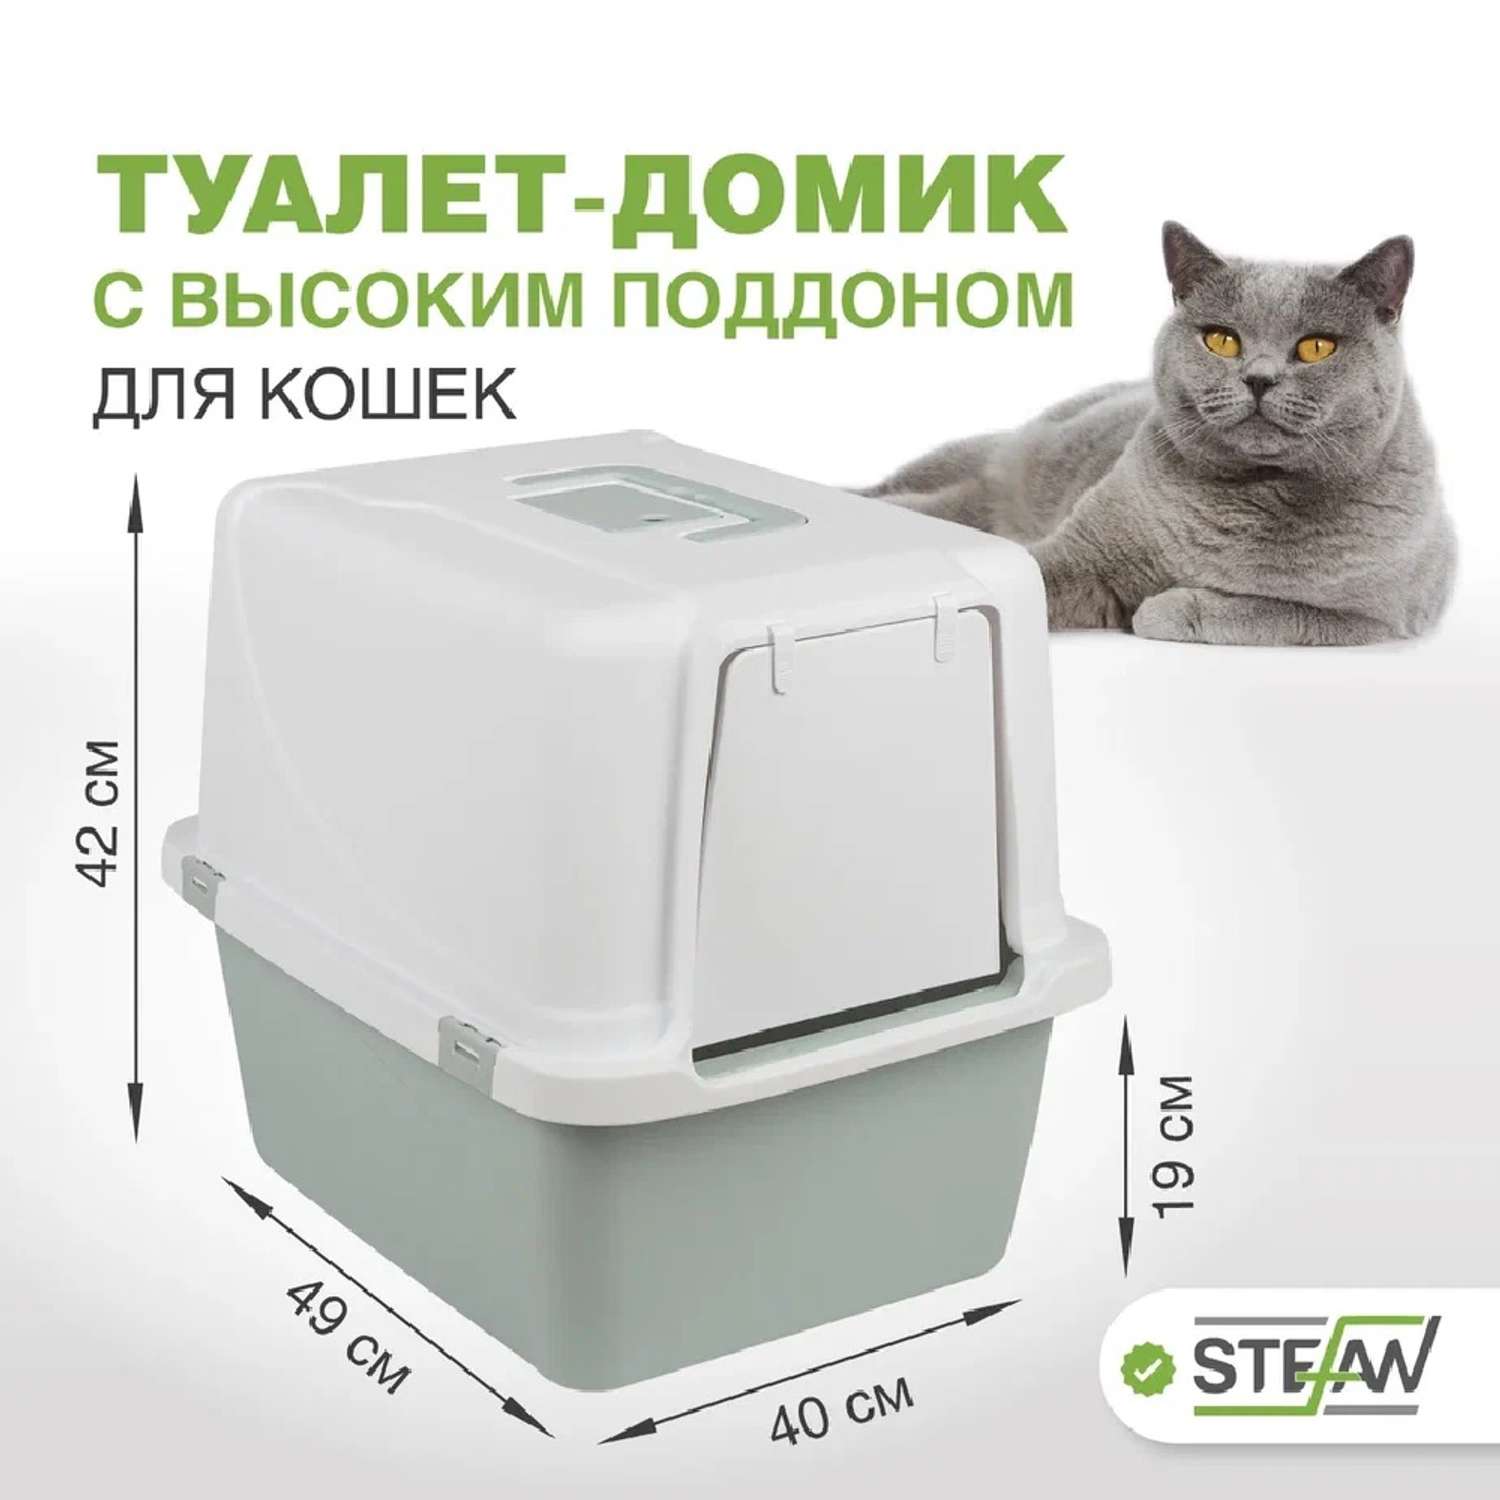 Nestor Туалет-домик для кошек (36771 Италия), размер 57х39х39 см